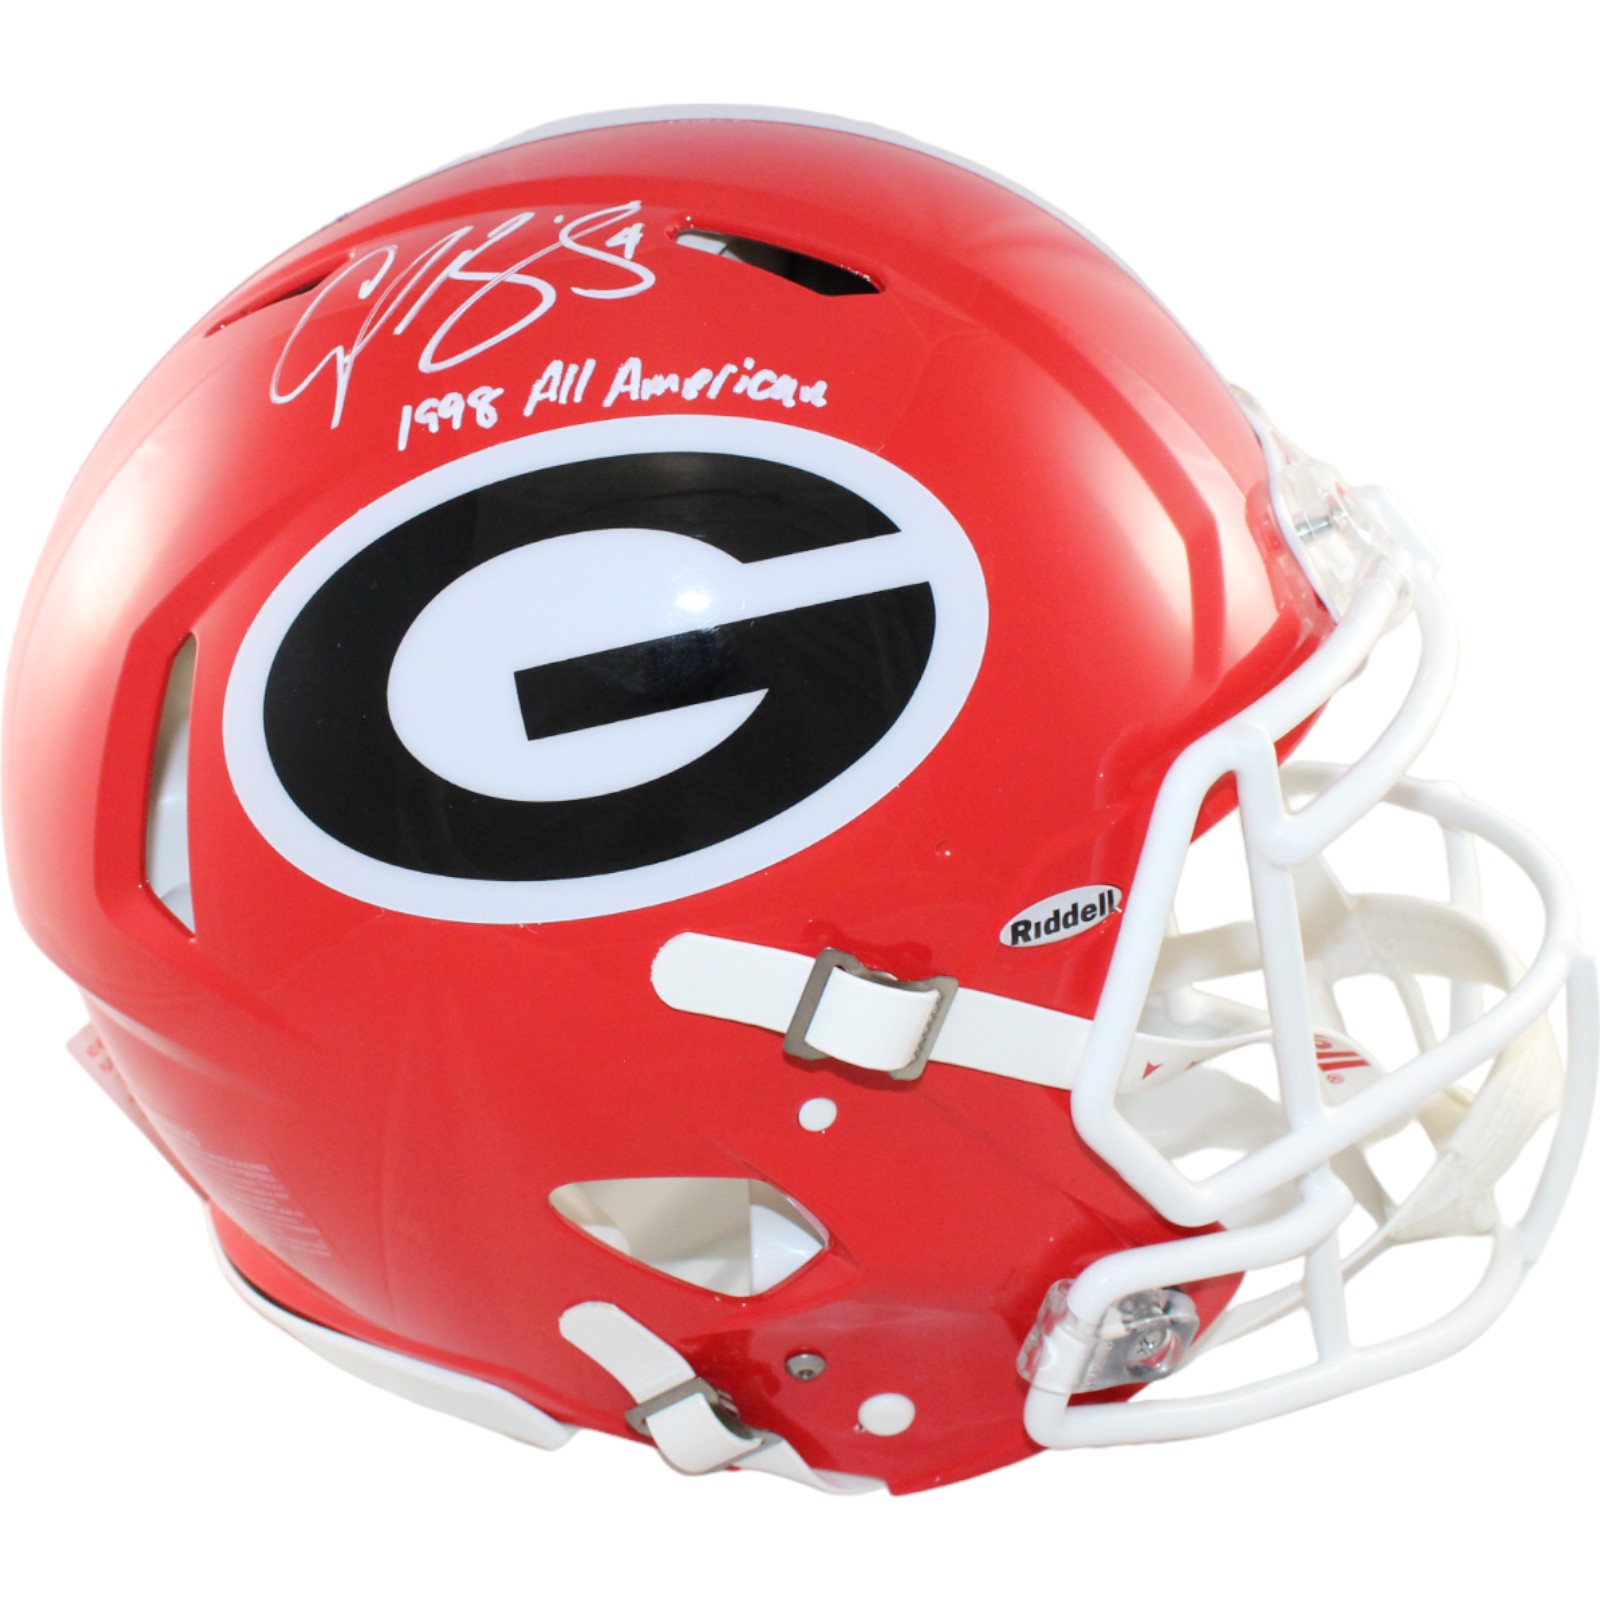 Champ Bailey Signed Georgia Bulldogs Authentic Helmet Insc BAS